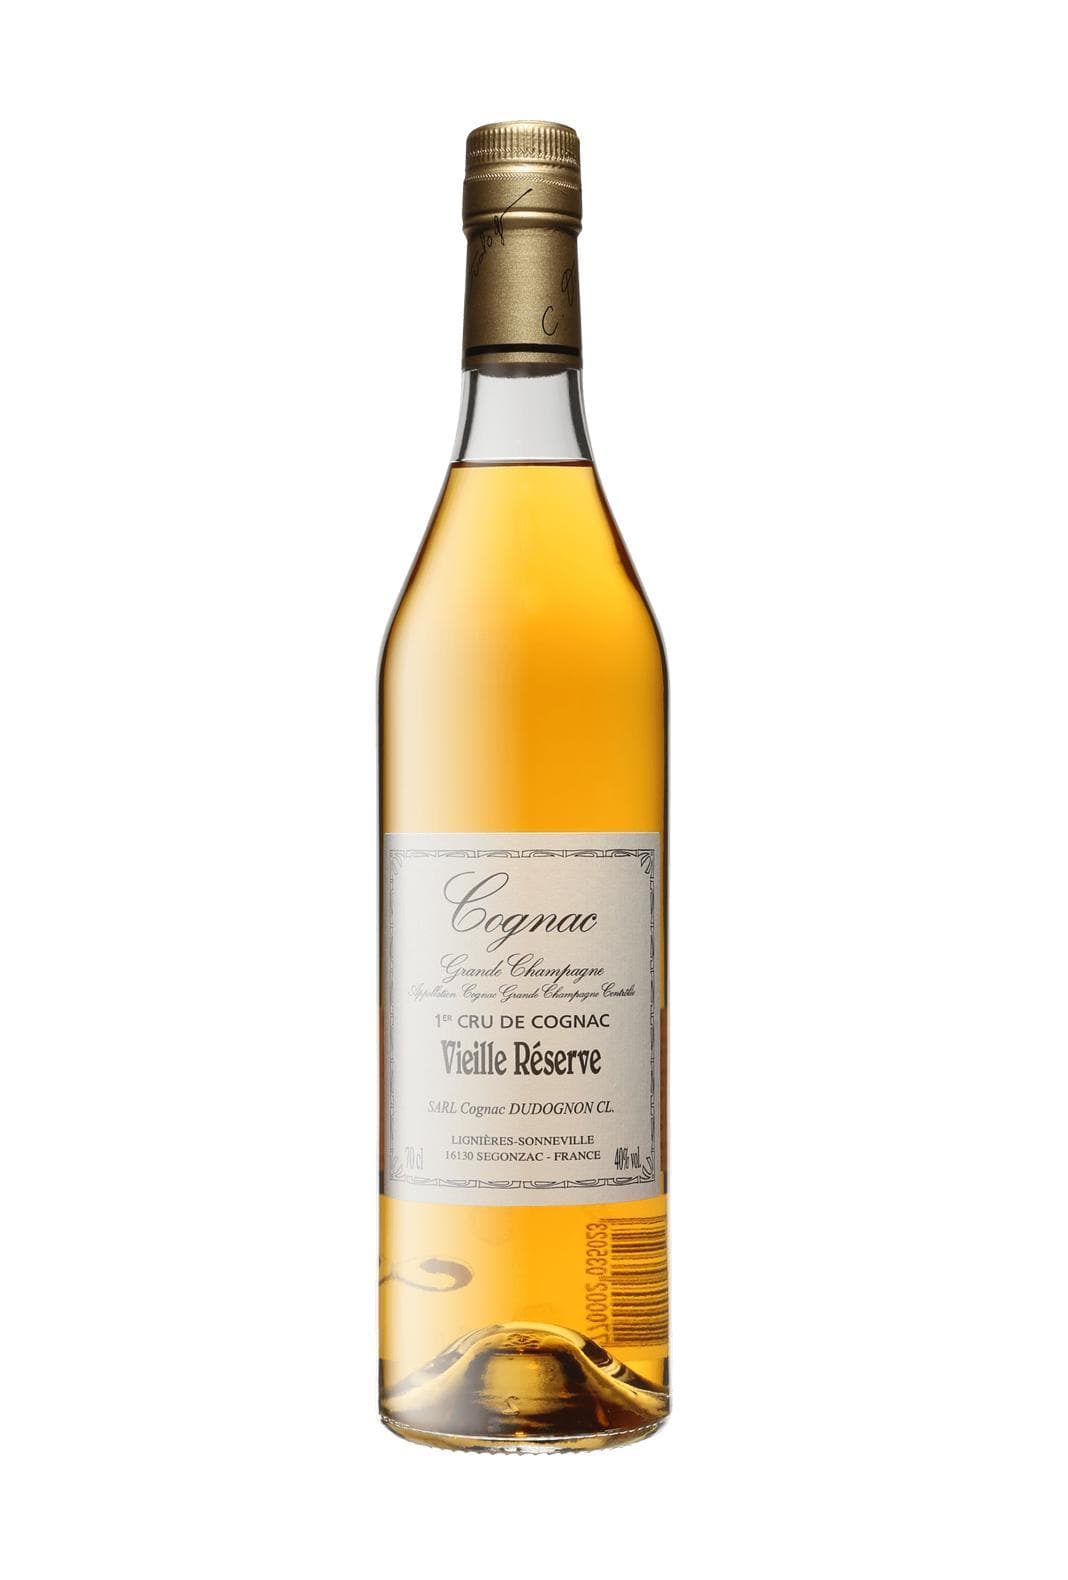 Dudognon Cognac Vieille Reserve 20 years 40% 700ml | Brandy | Shop online at Spirits of France